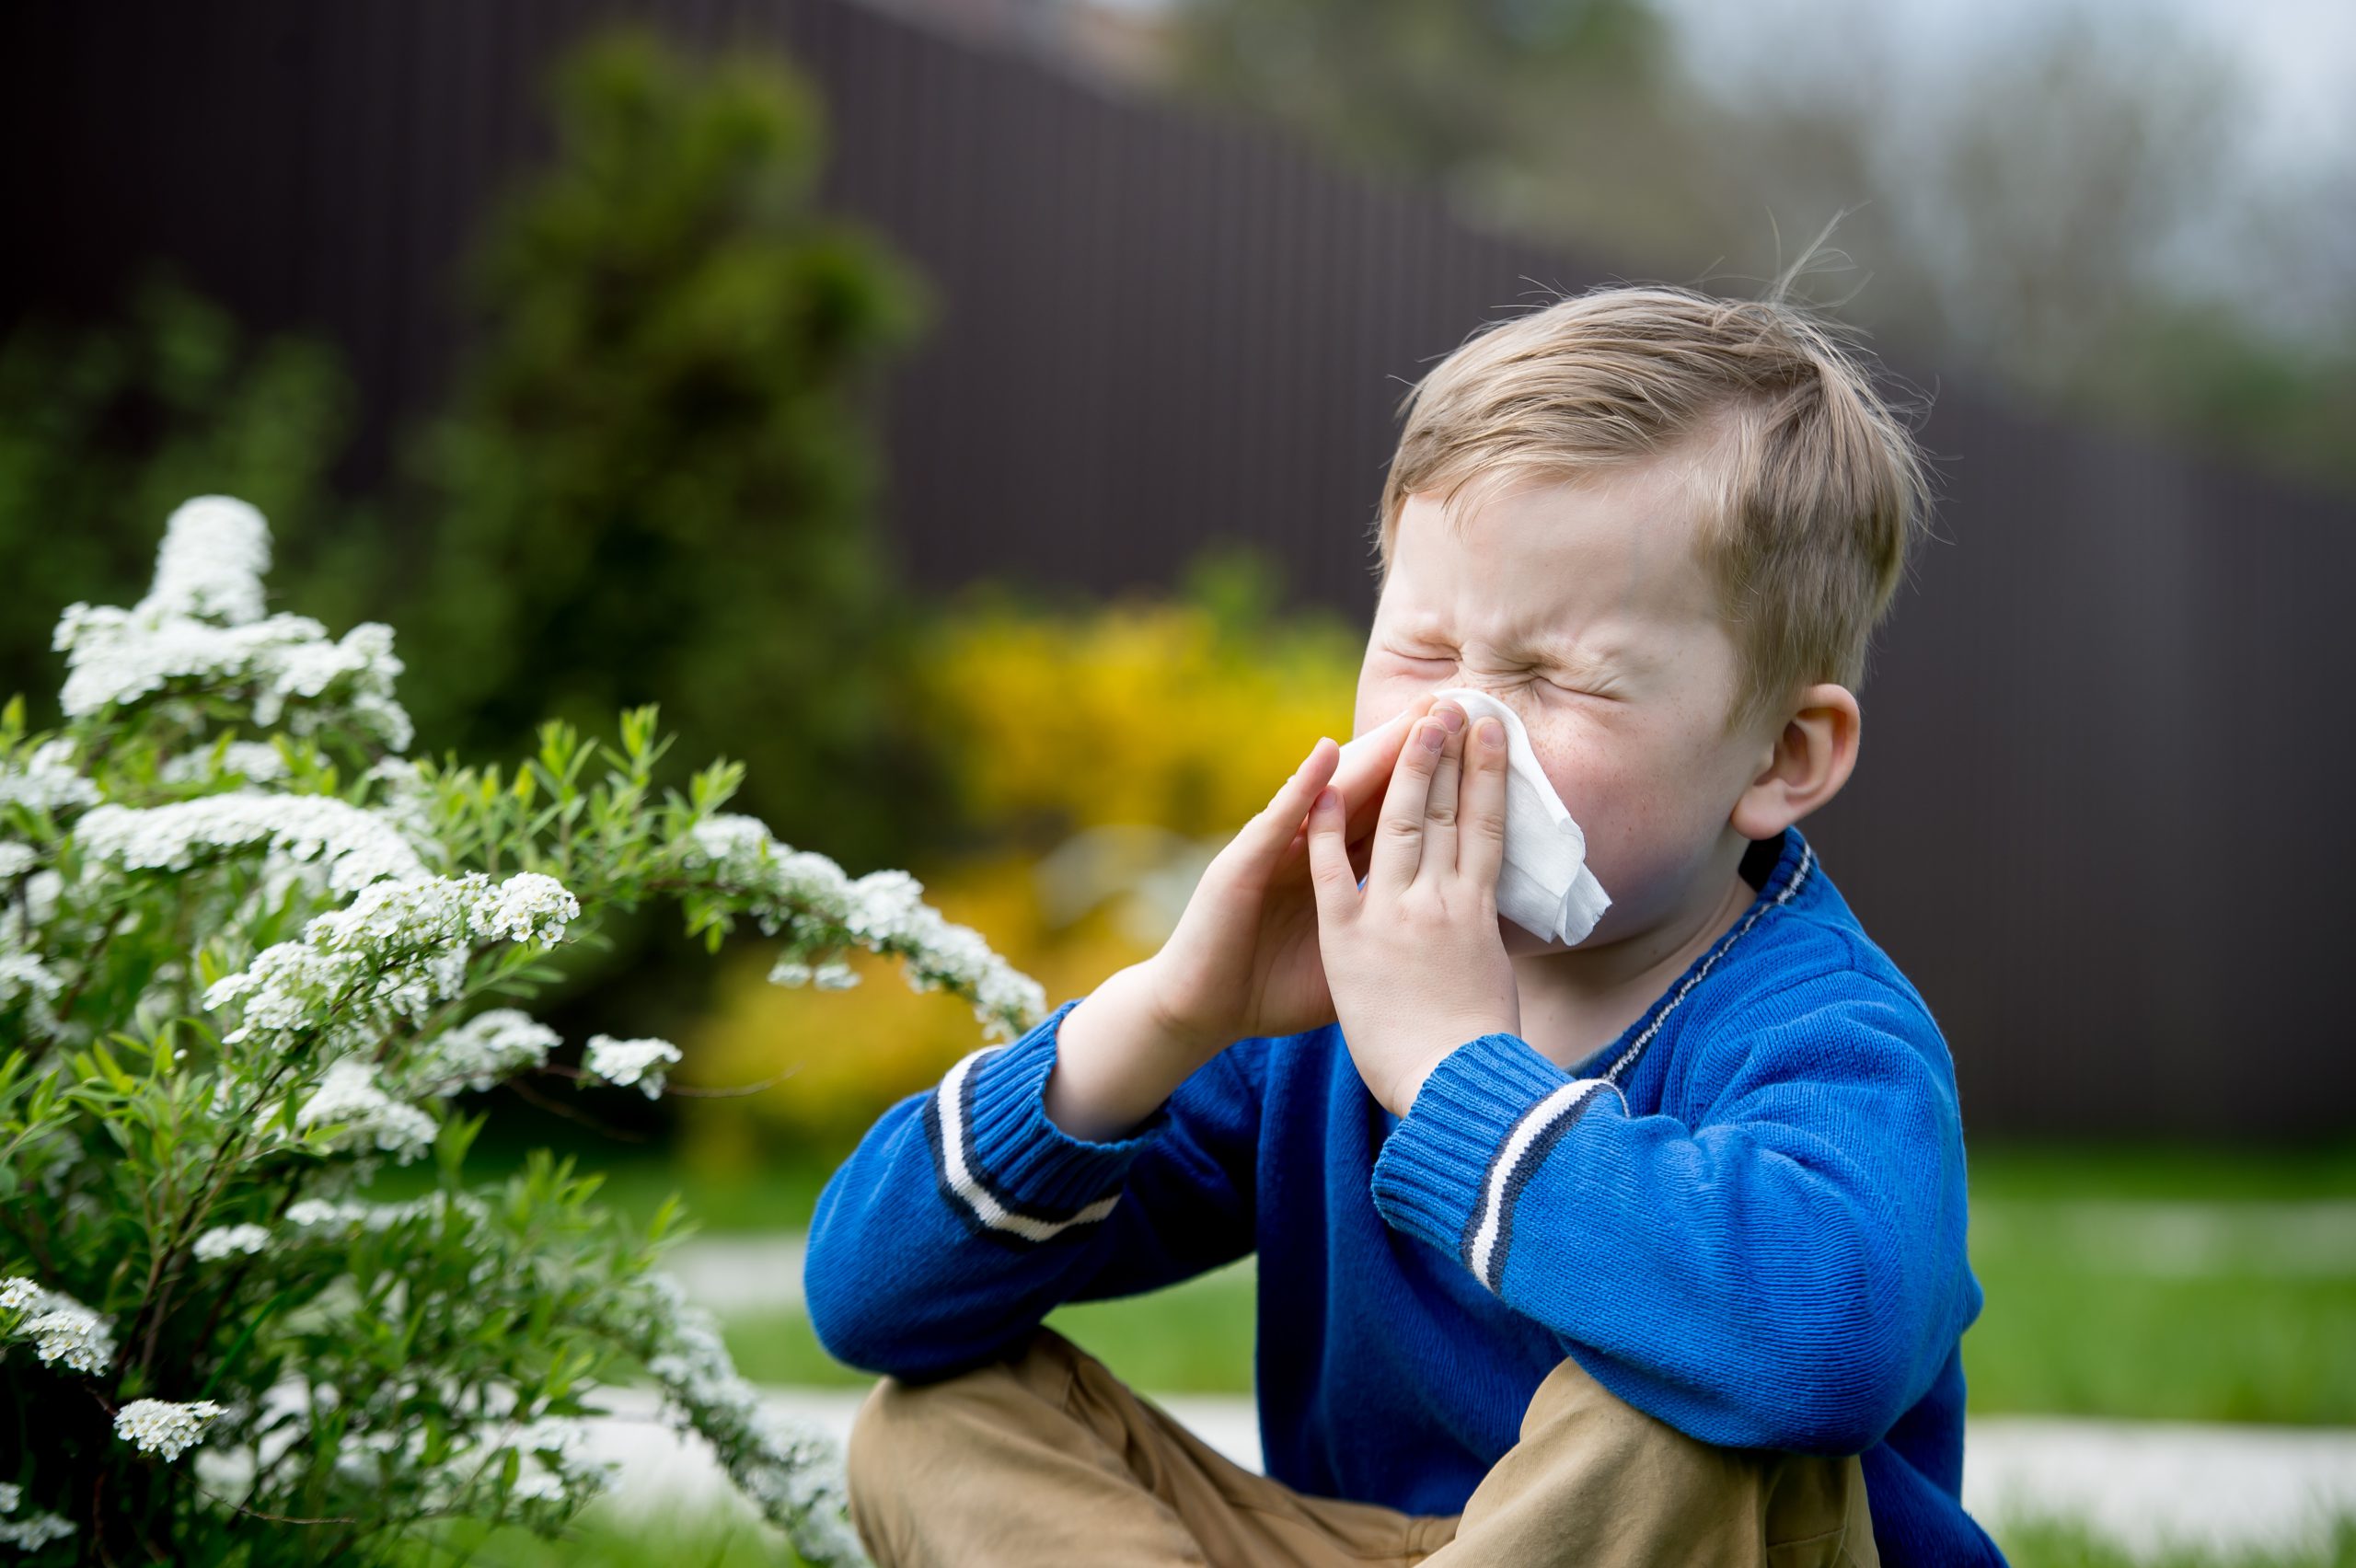 alergias-ninos-infancia